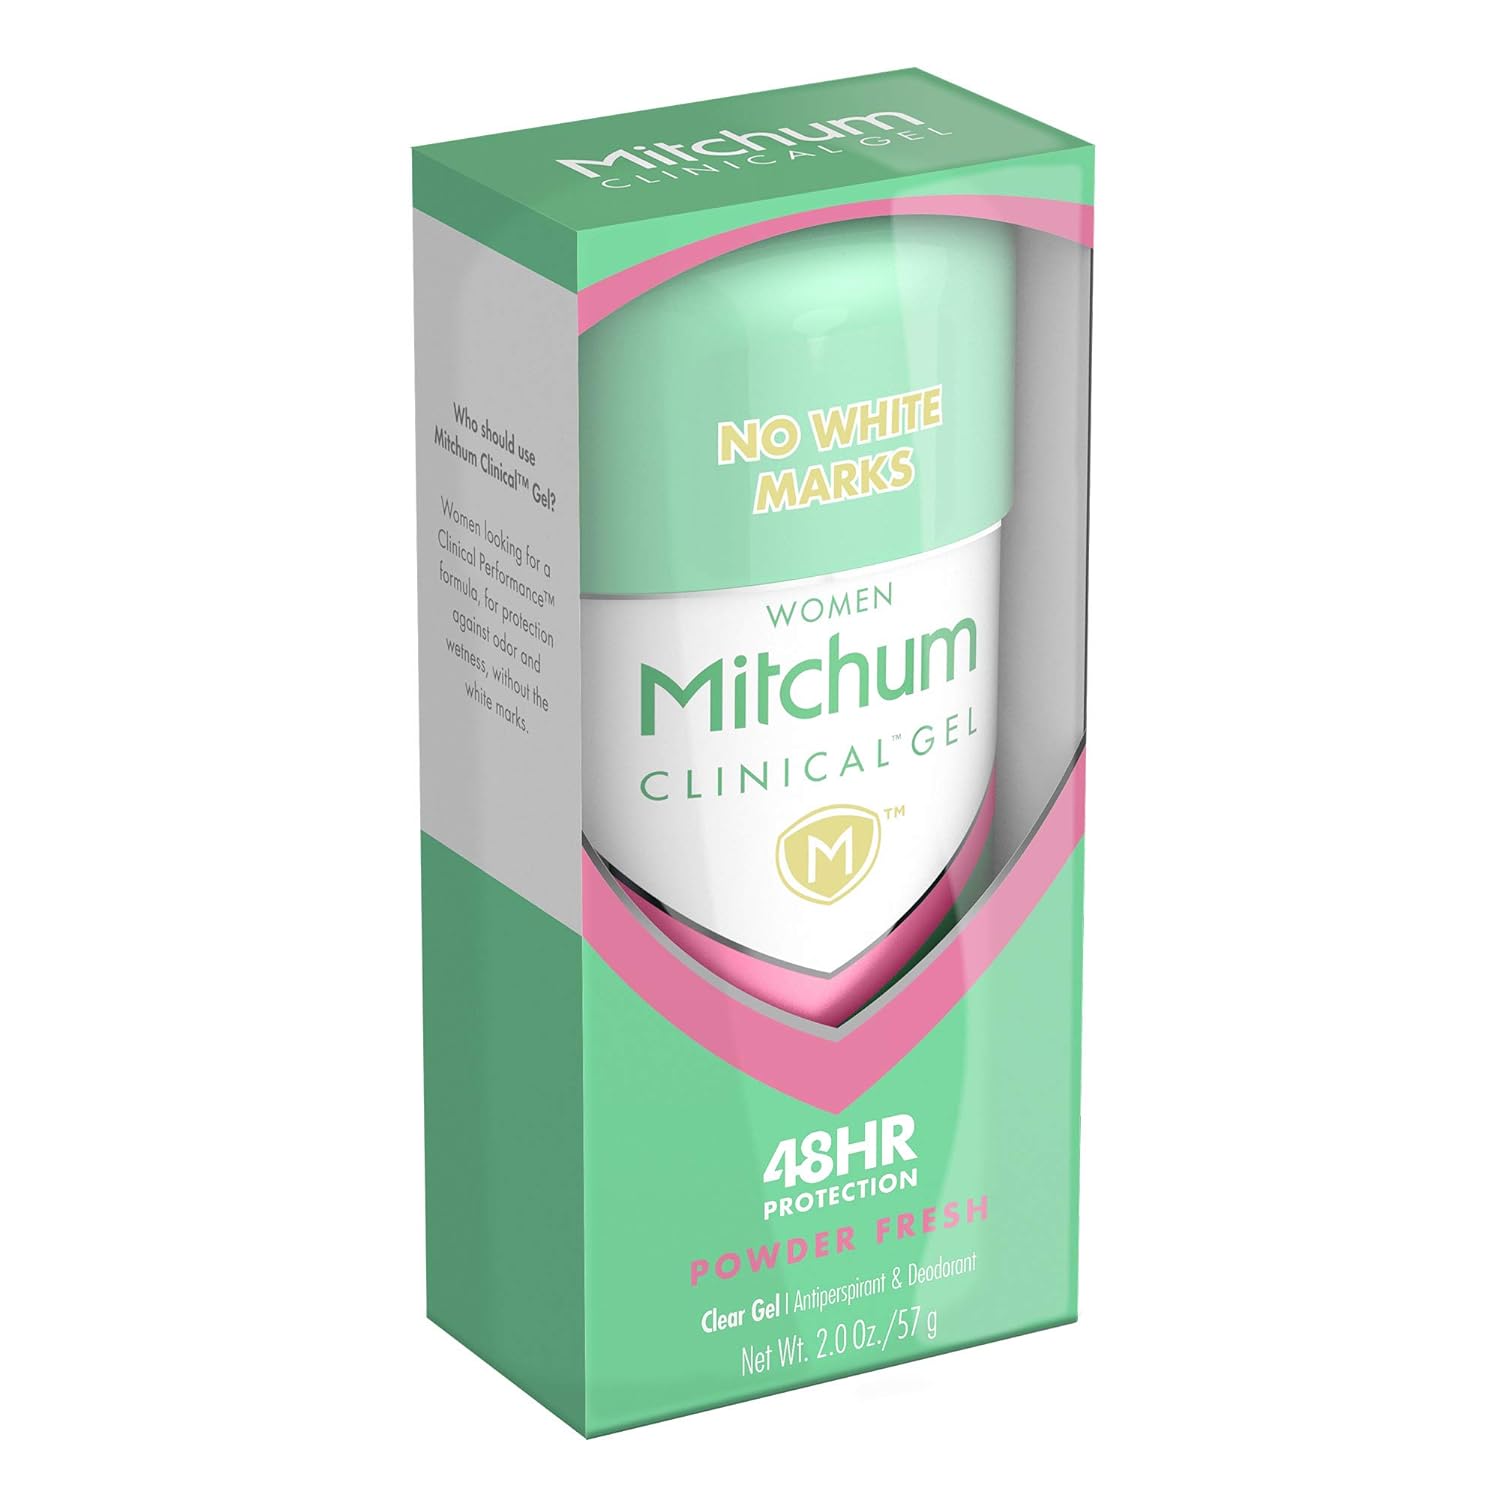 Mitchum Women Clinical Gel Antiperspirant Deodorant, Powder Fresh, 2.0oz : Beauty & Personal Care